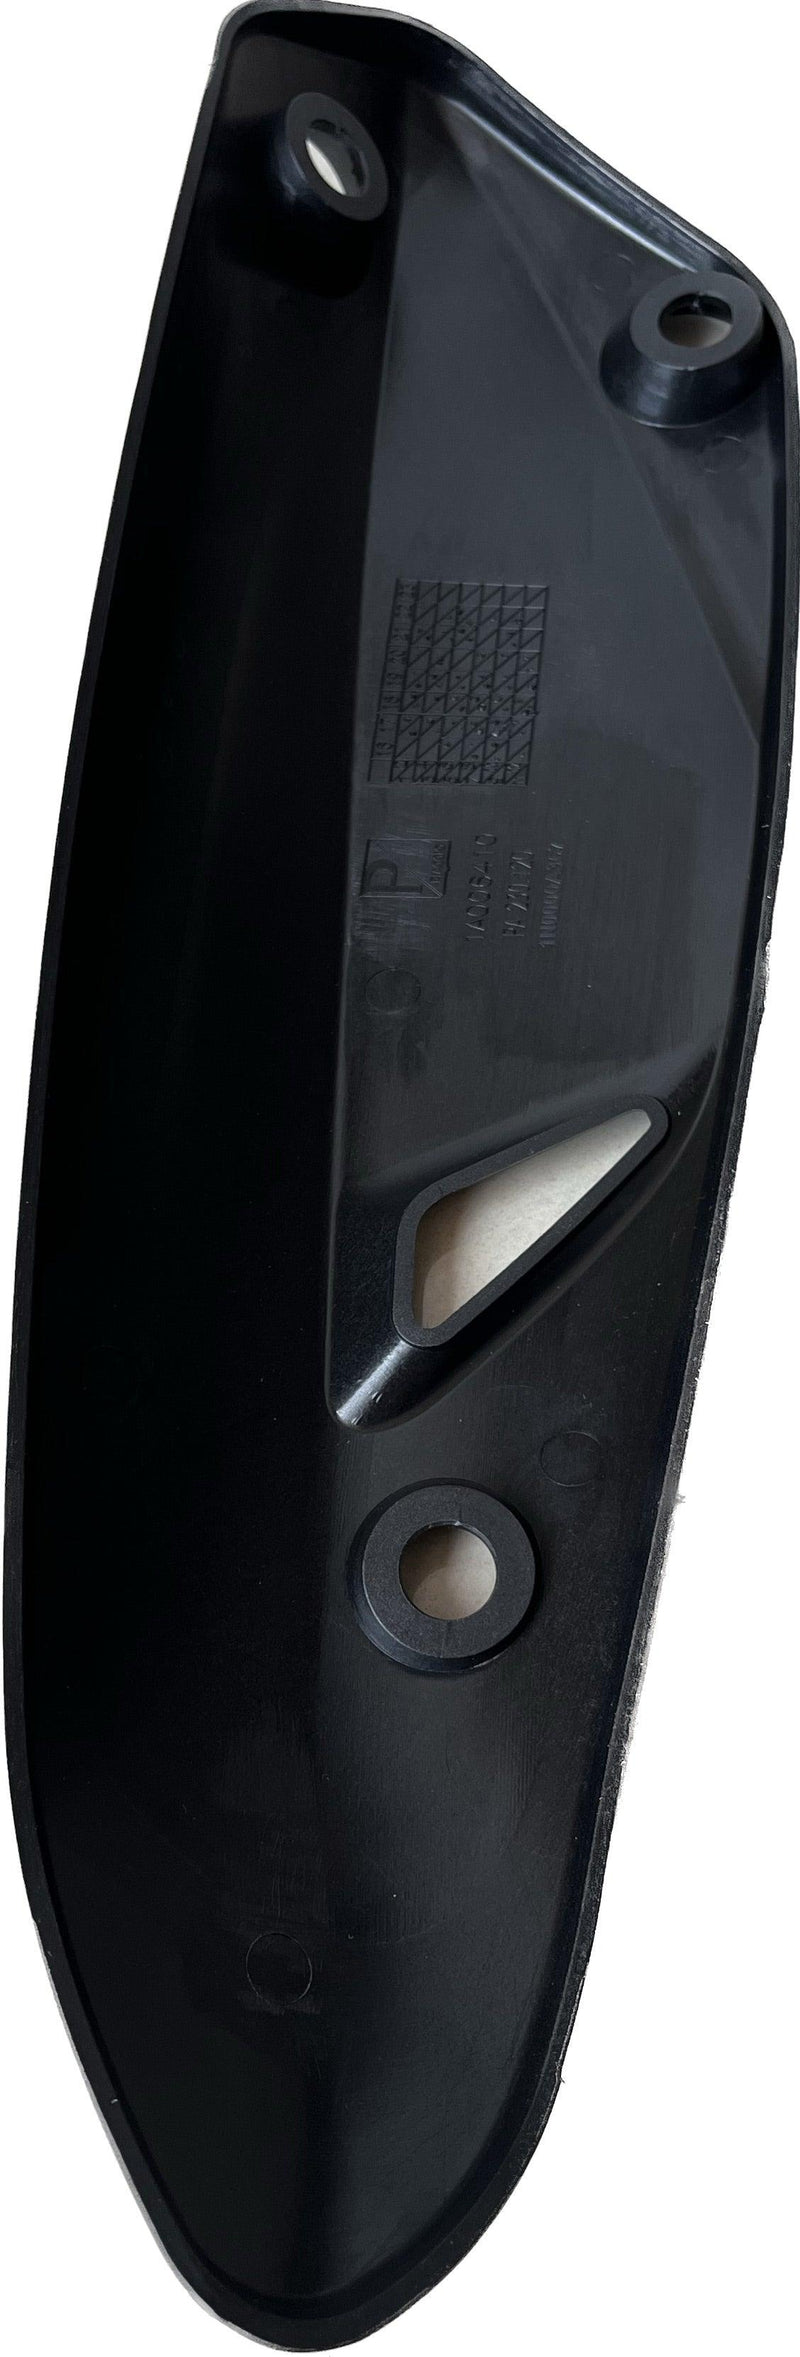 Aprilia Bs4 silencer cover (thermal protection) - SPARIFY